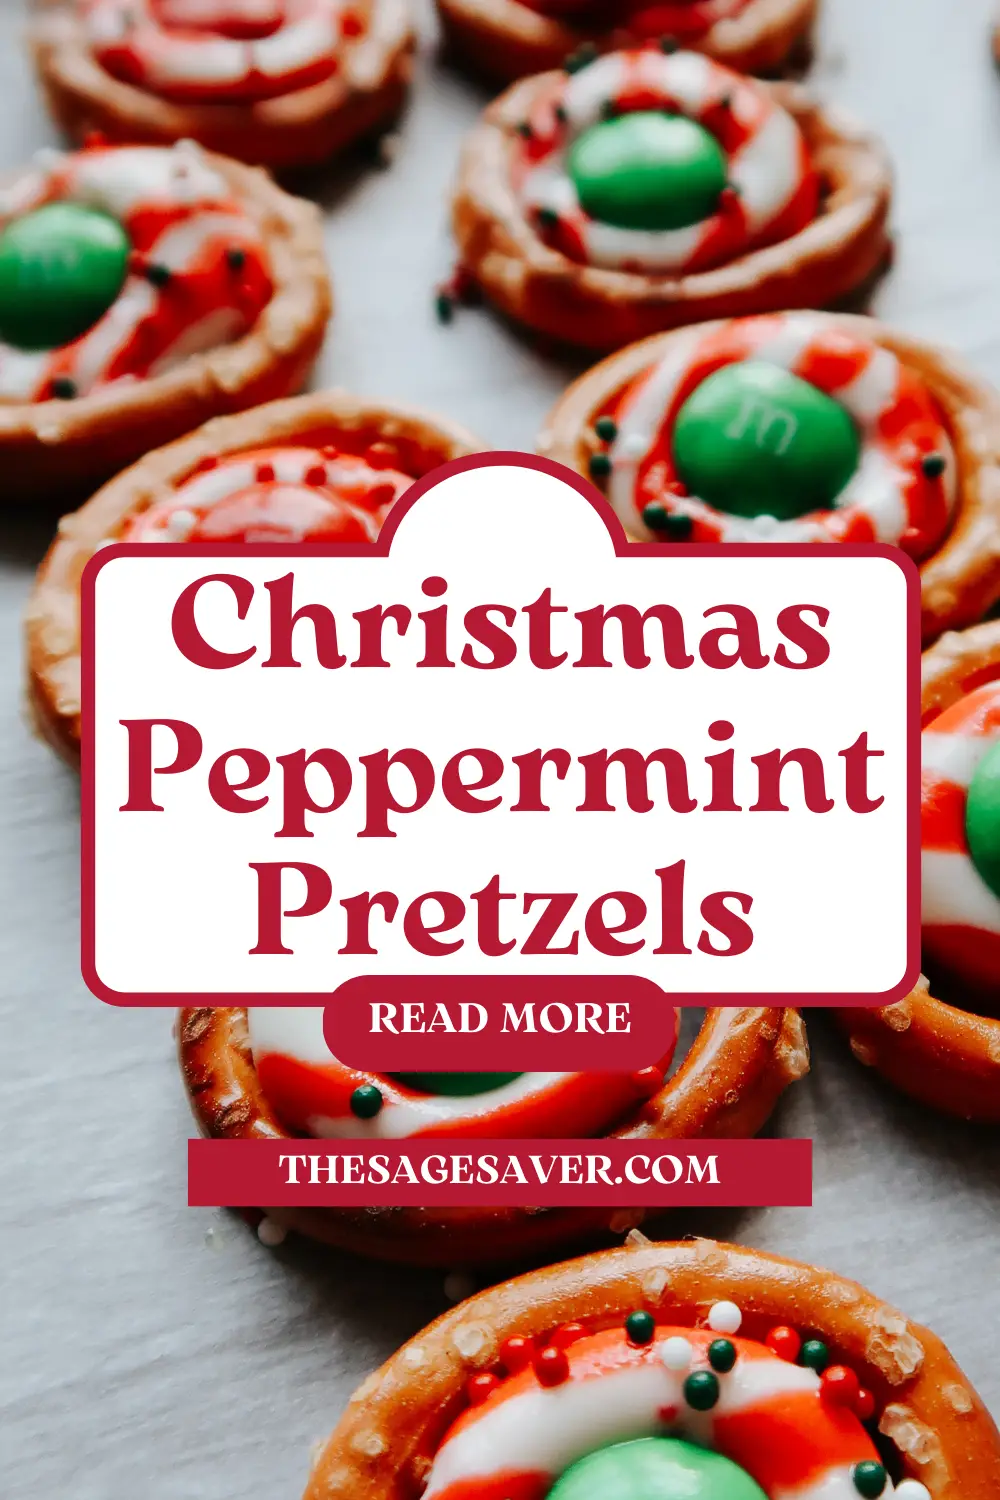 How to Make Christmas Peppermint Pretzels